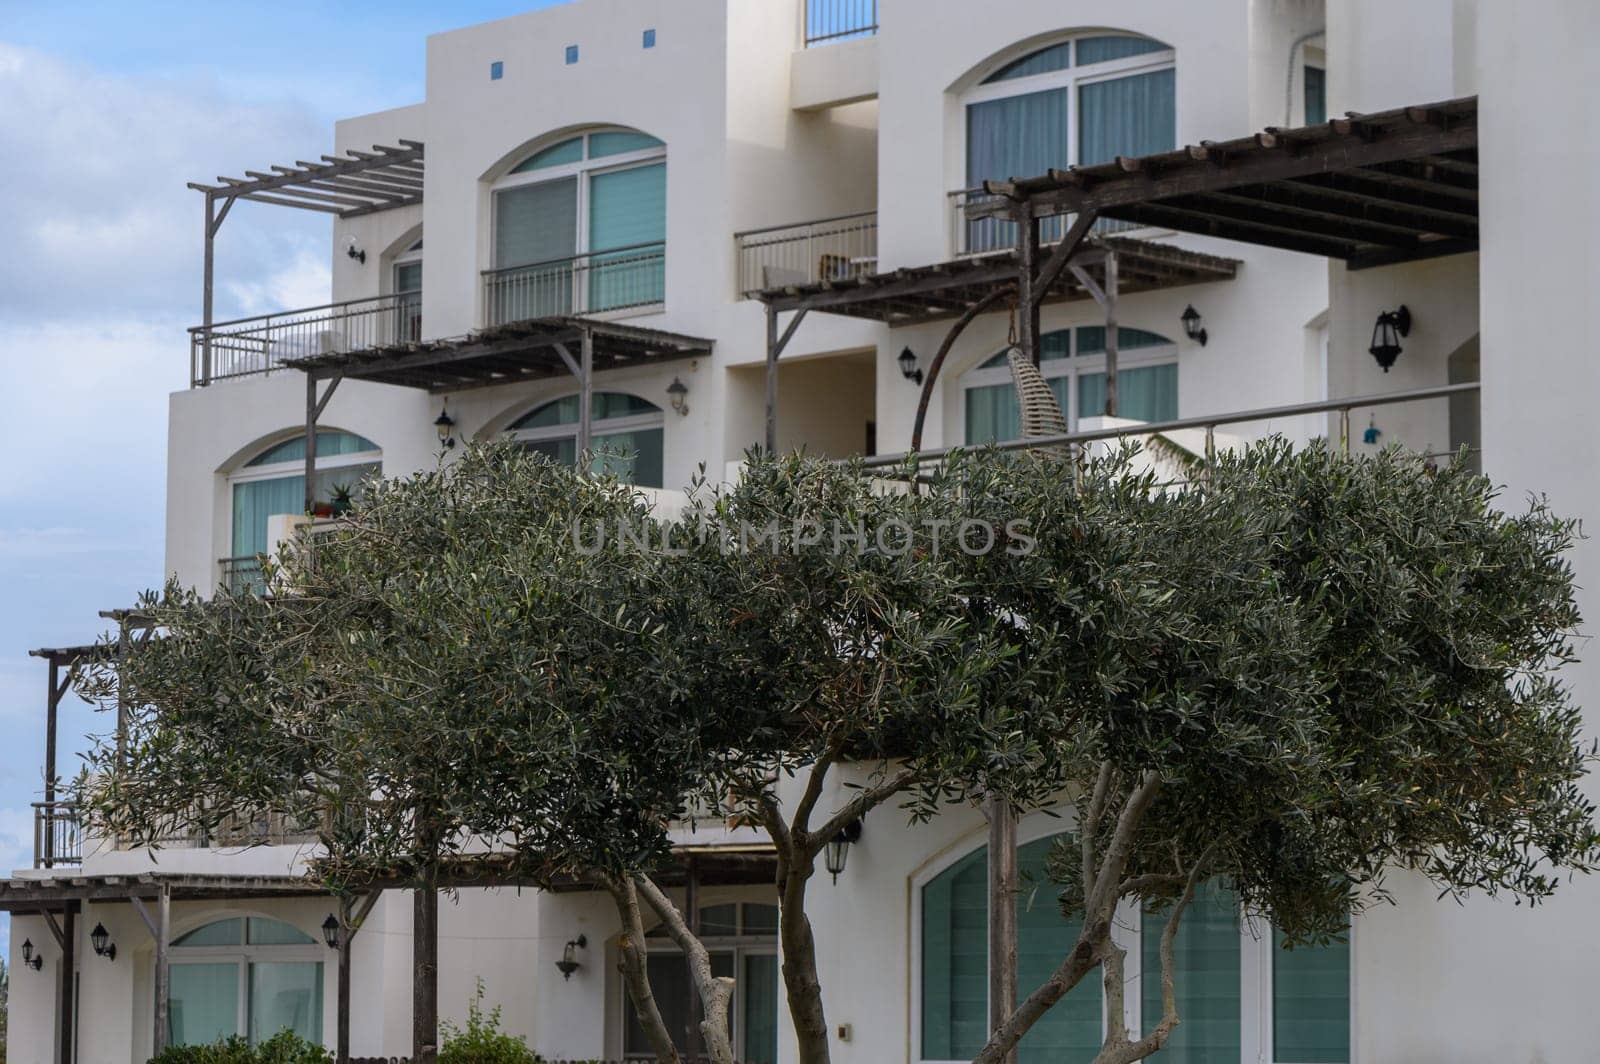 residential complex with white Mediterranean style villas 2